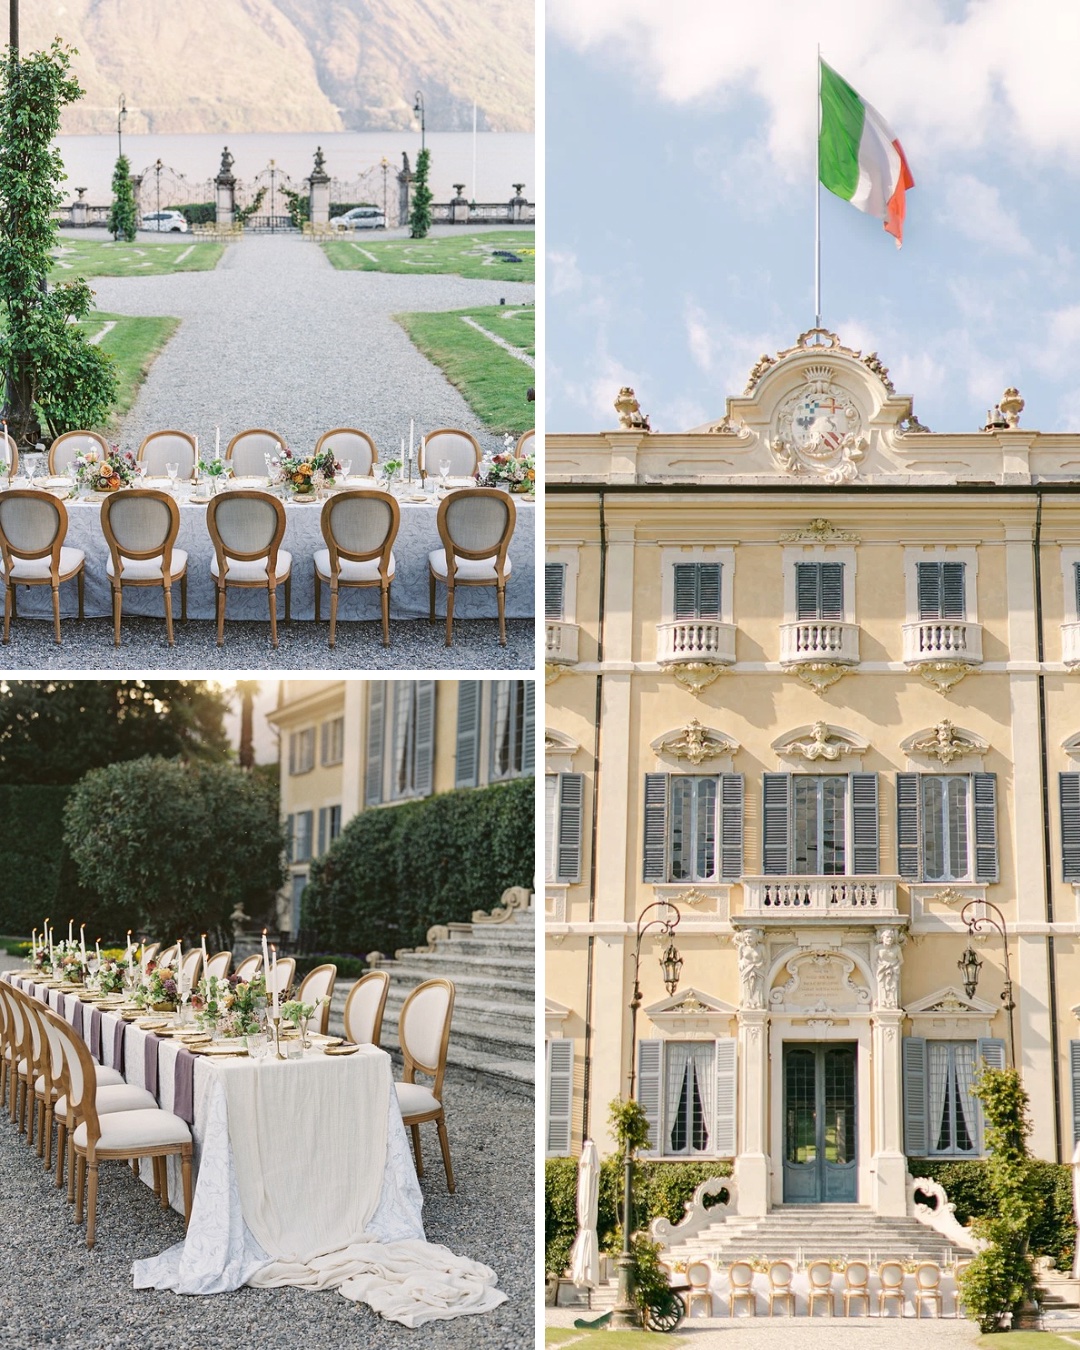 Collage of photos of an Italian villa set up for a wedding reception